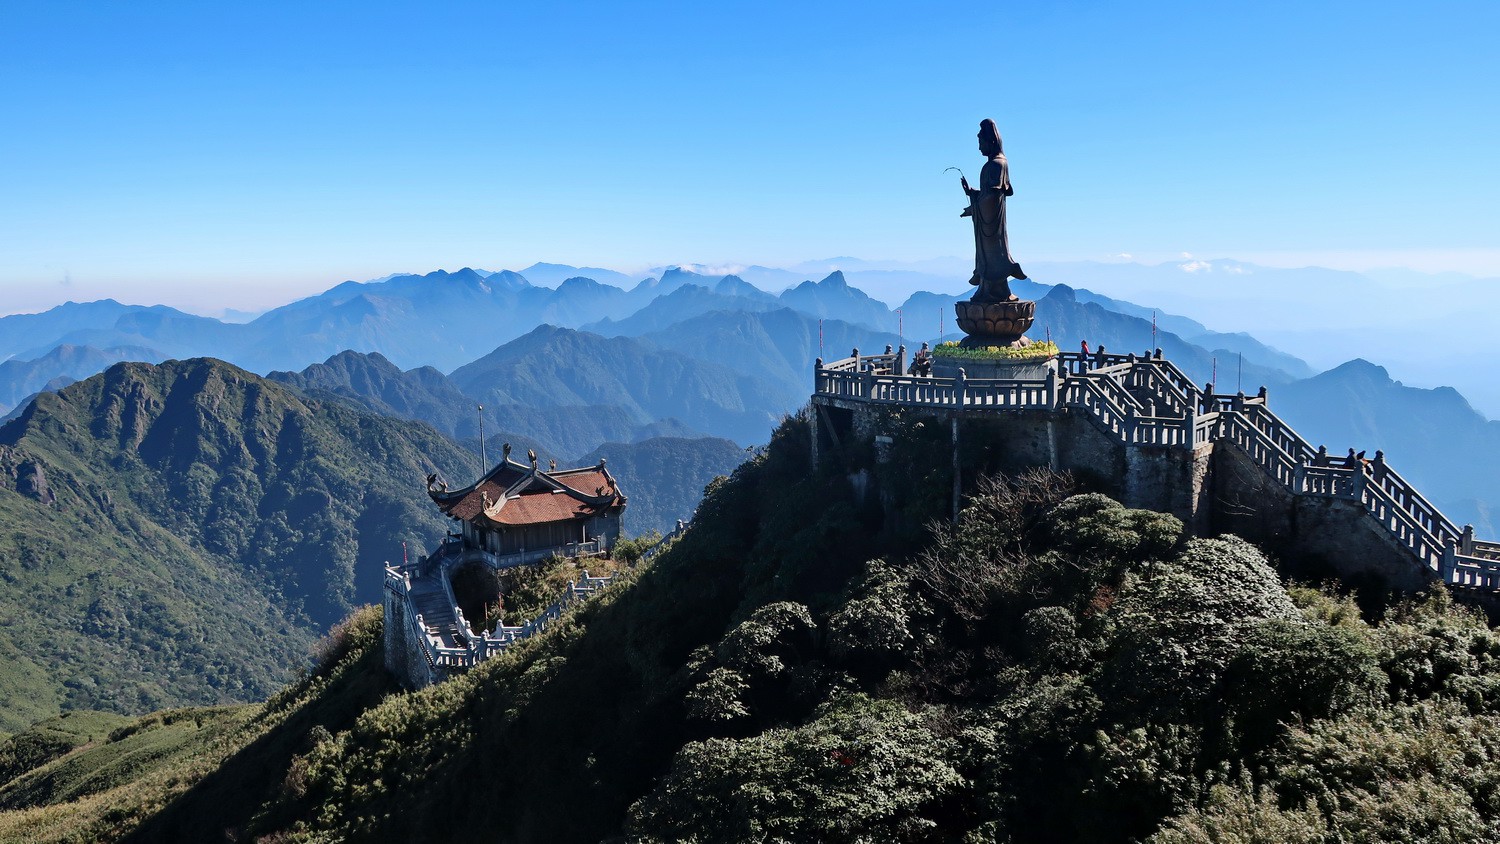 Guan Yin Statue with mountains of Vietnam